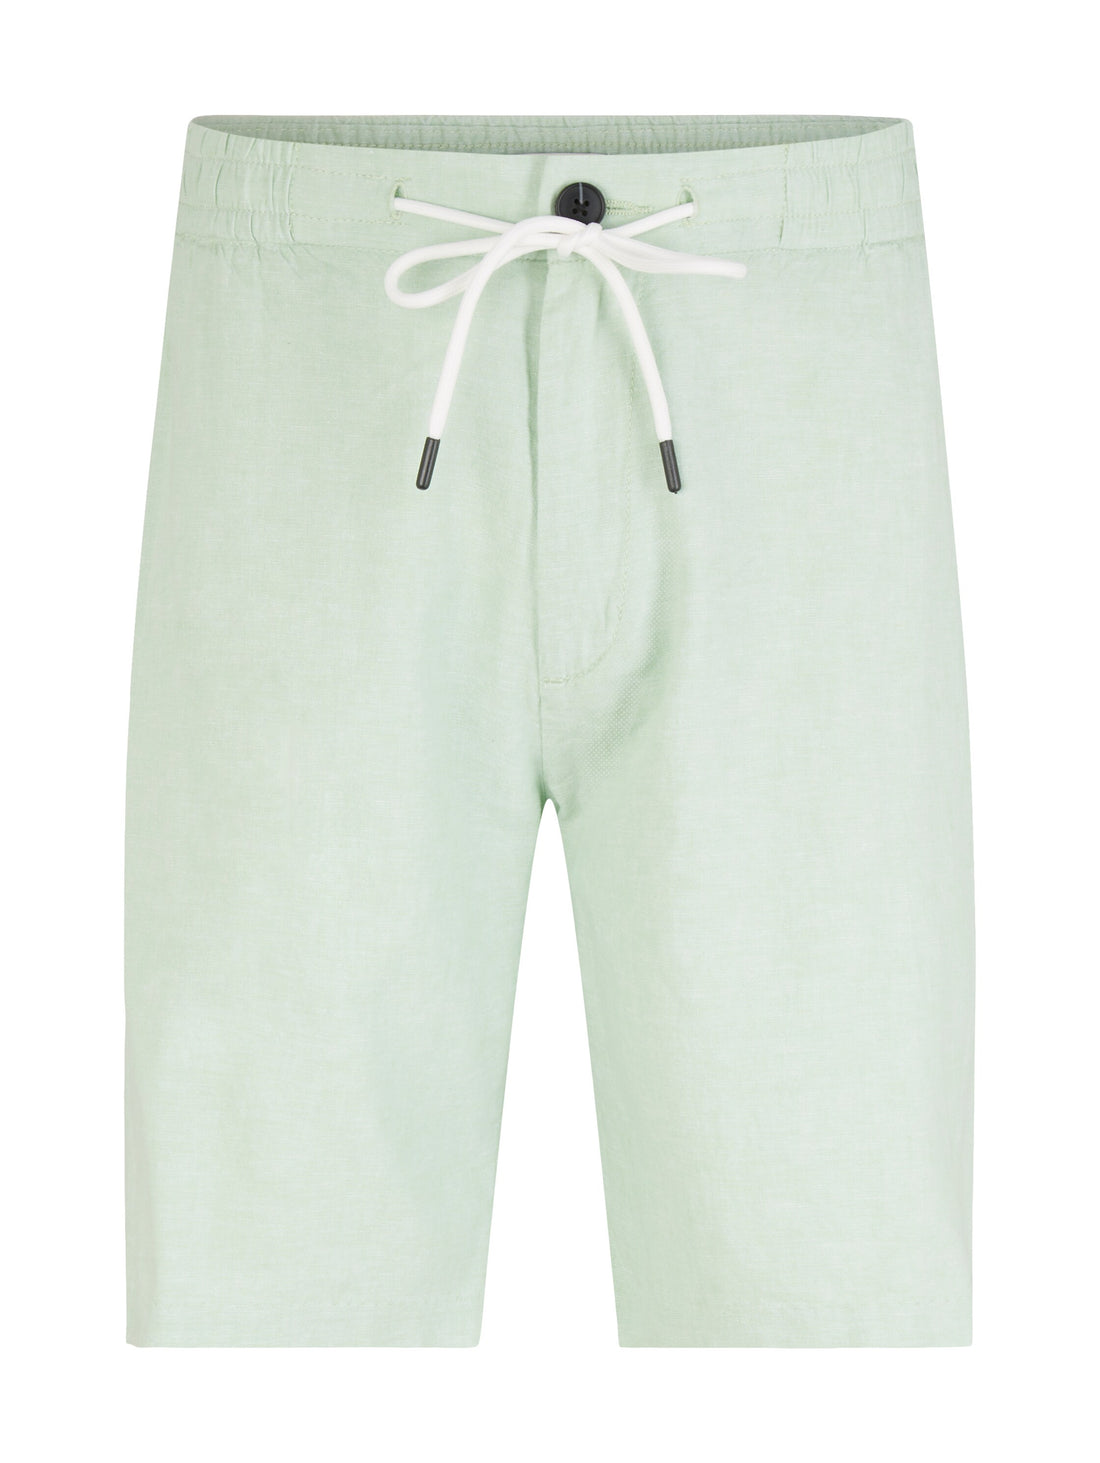 Pale Green Chino Shorts With Drawstring